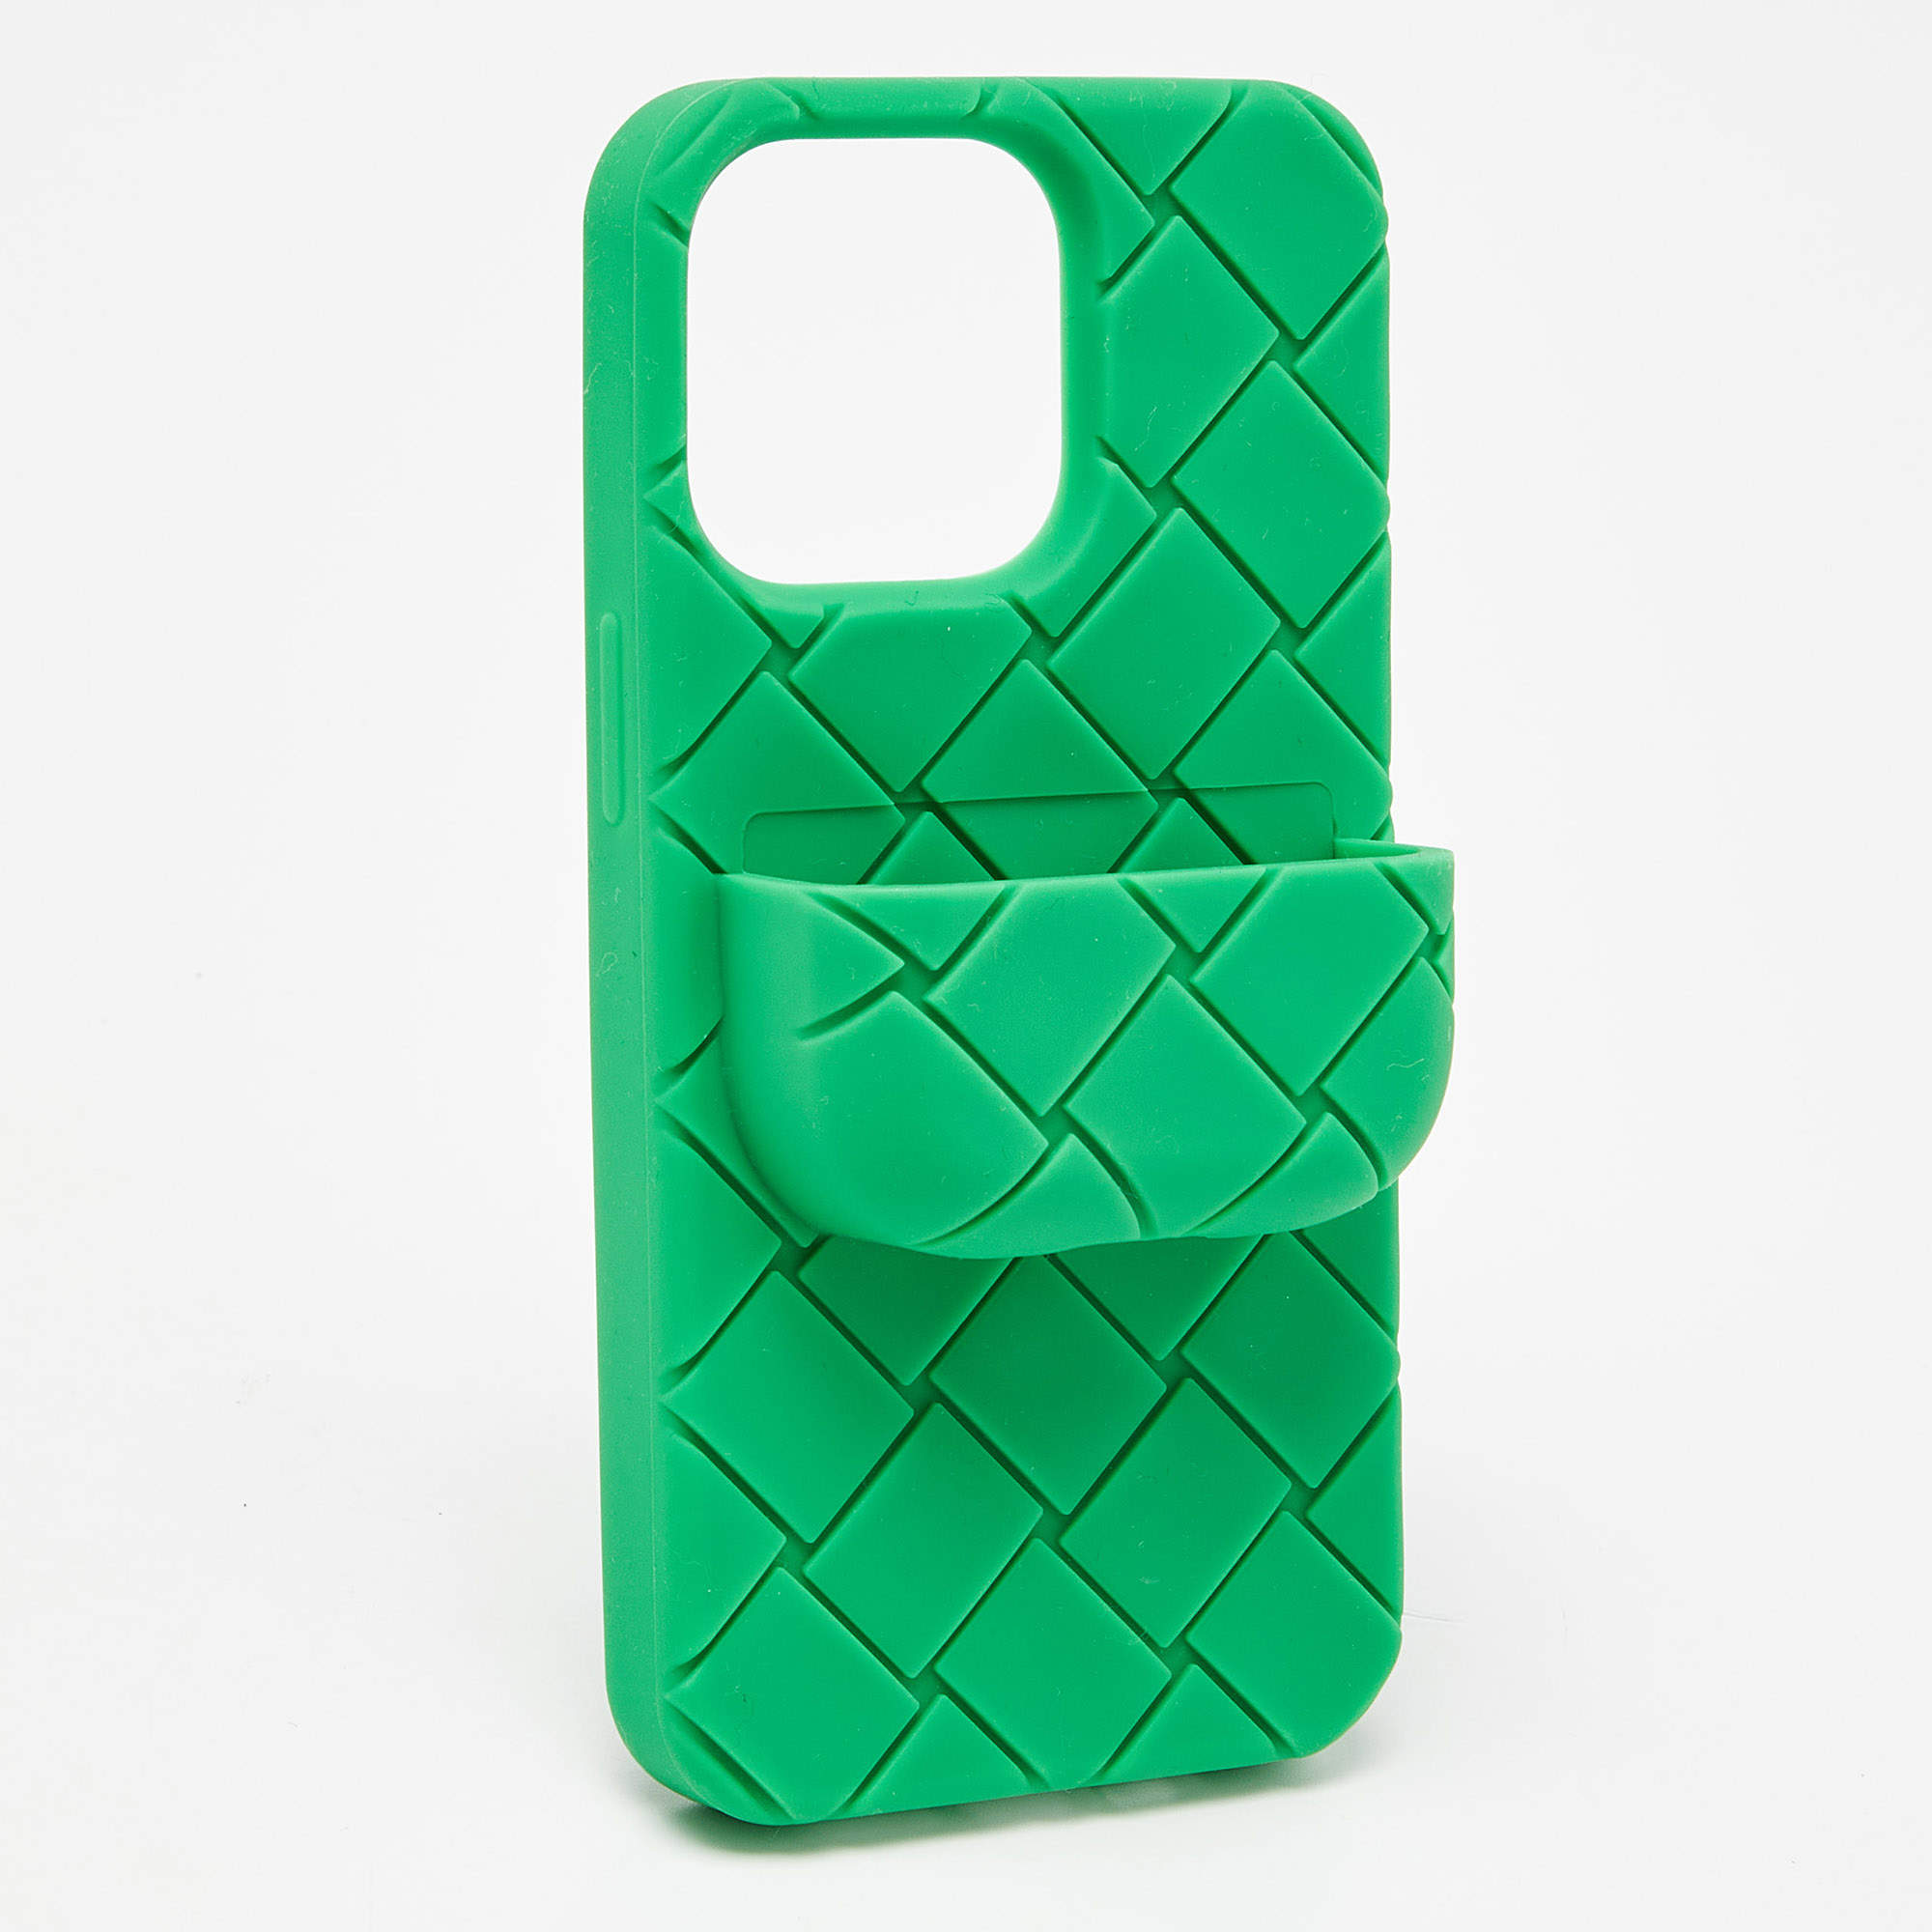 Green Goyard iPhone X Protective phone case (Authentic Goyard Bag Used)